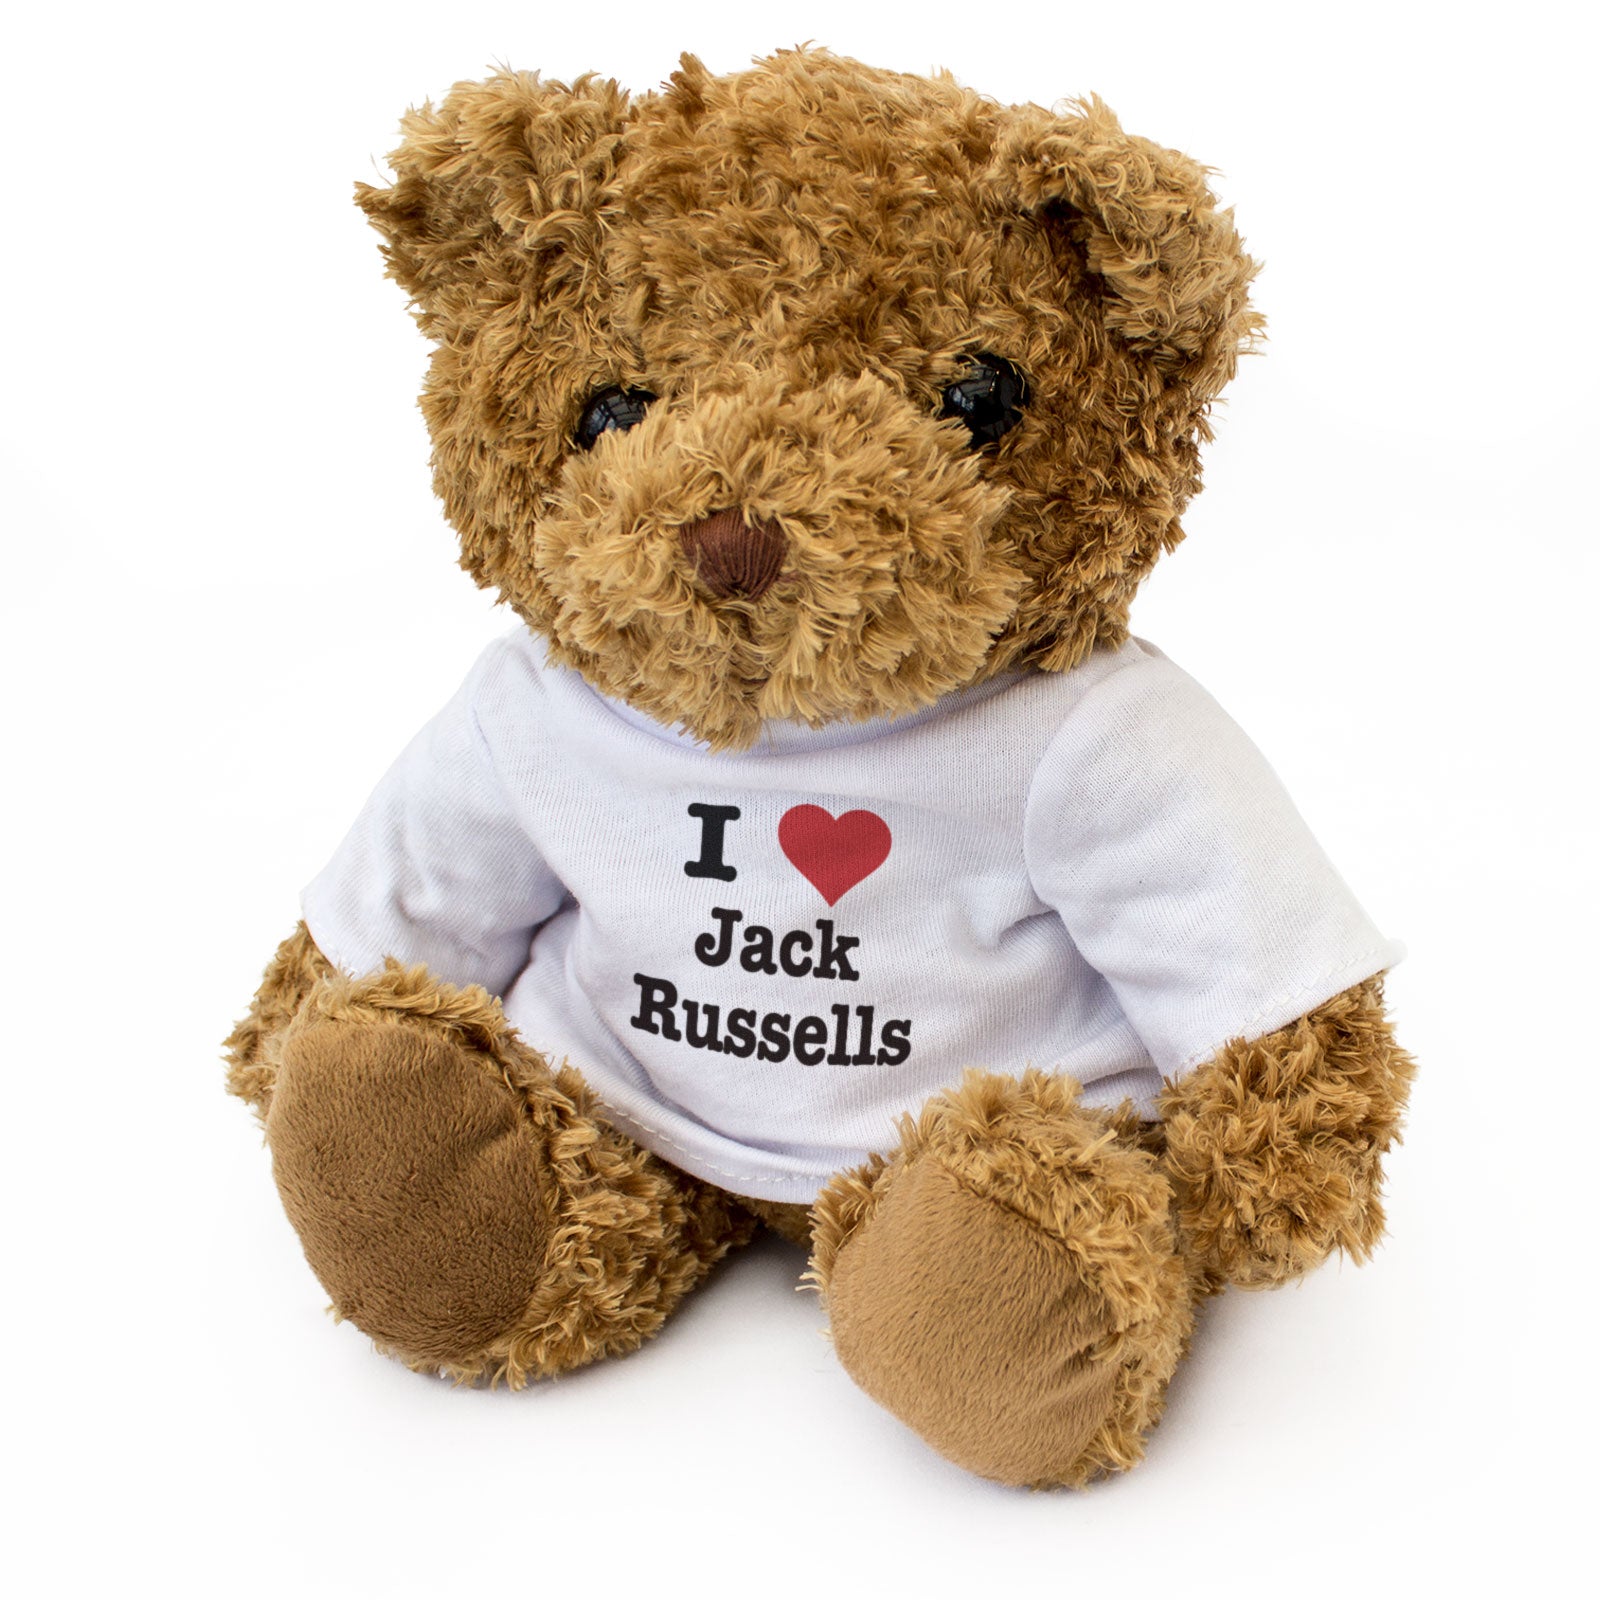 I Love Jack Russells - Teddy Bear